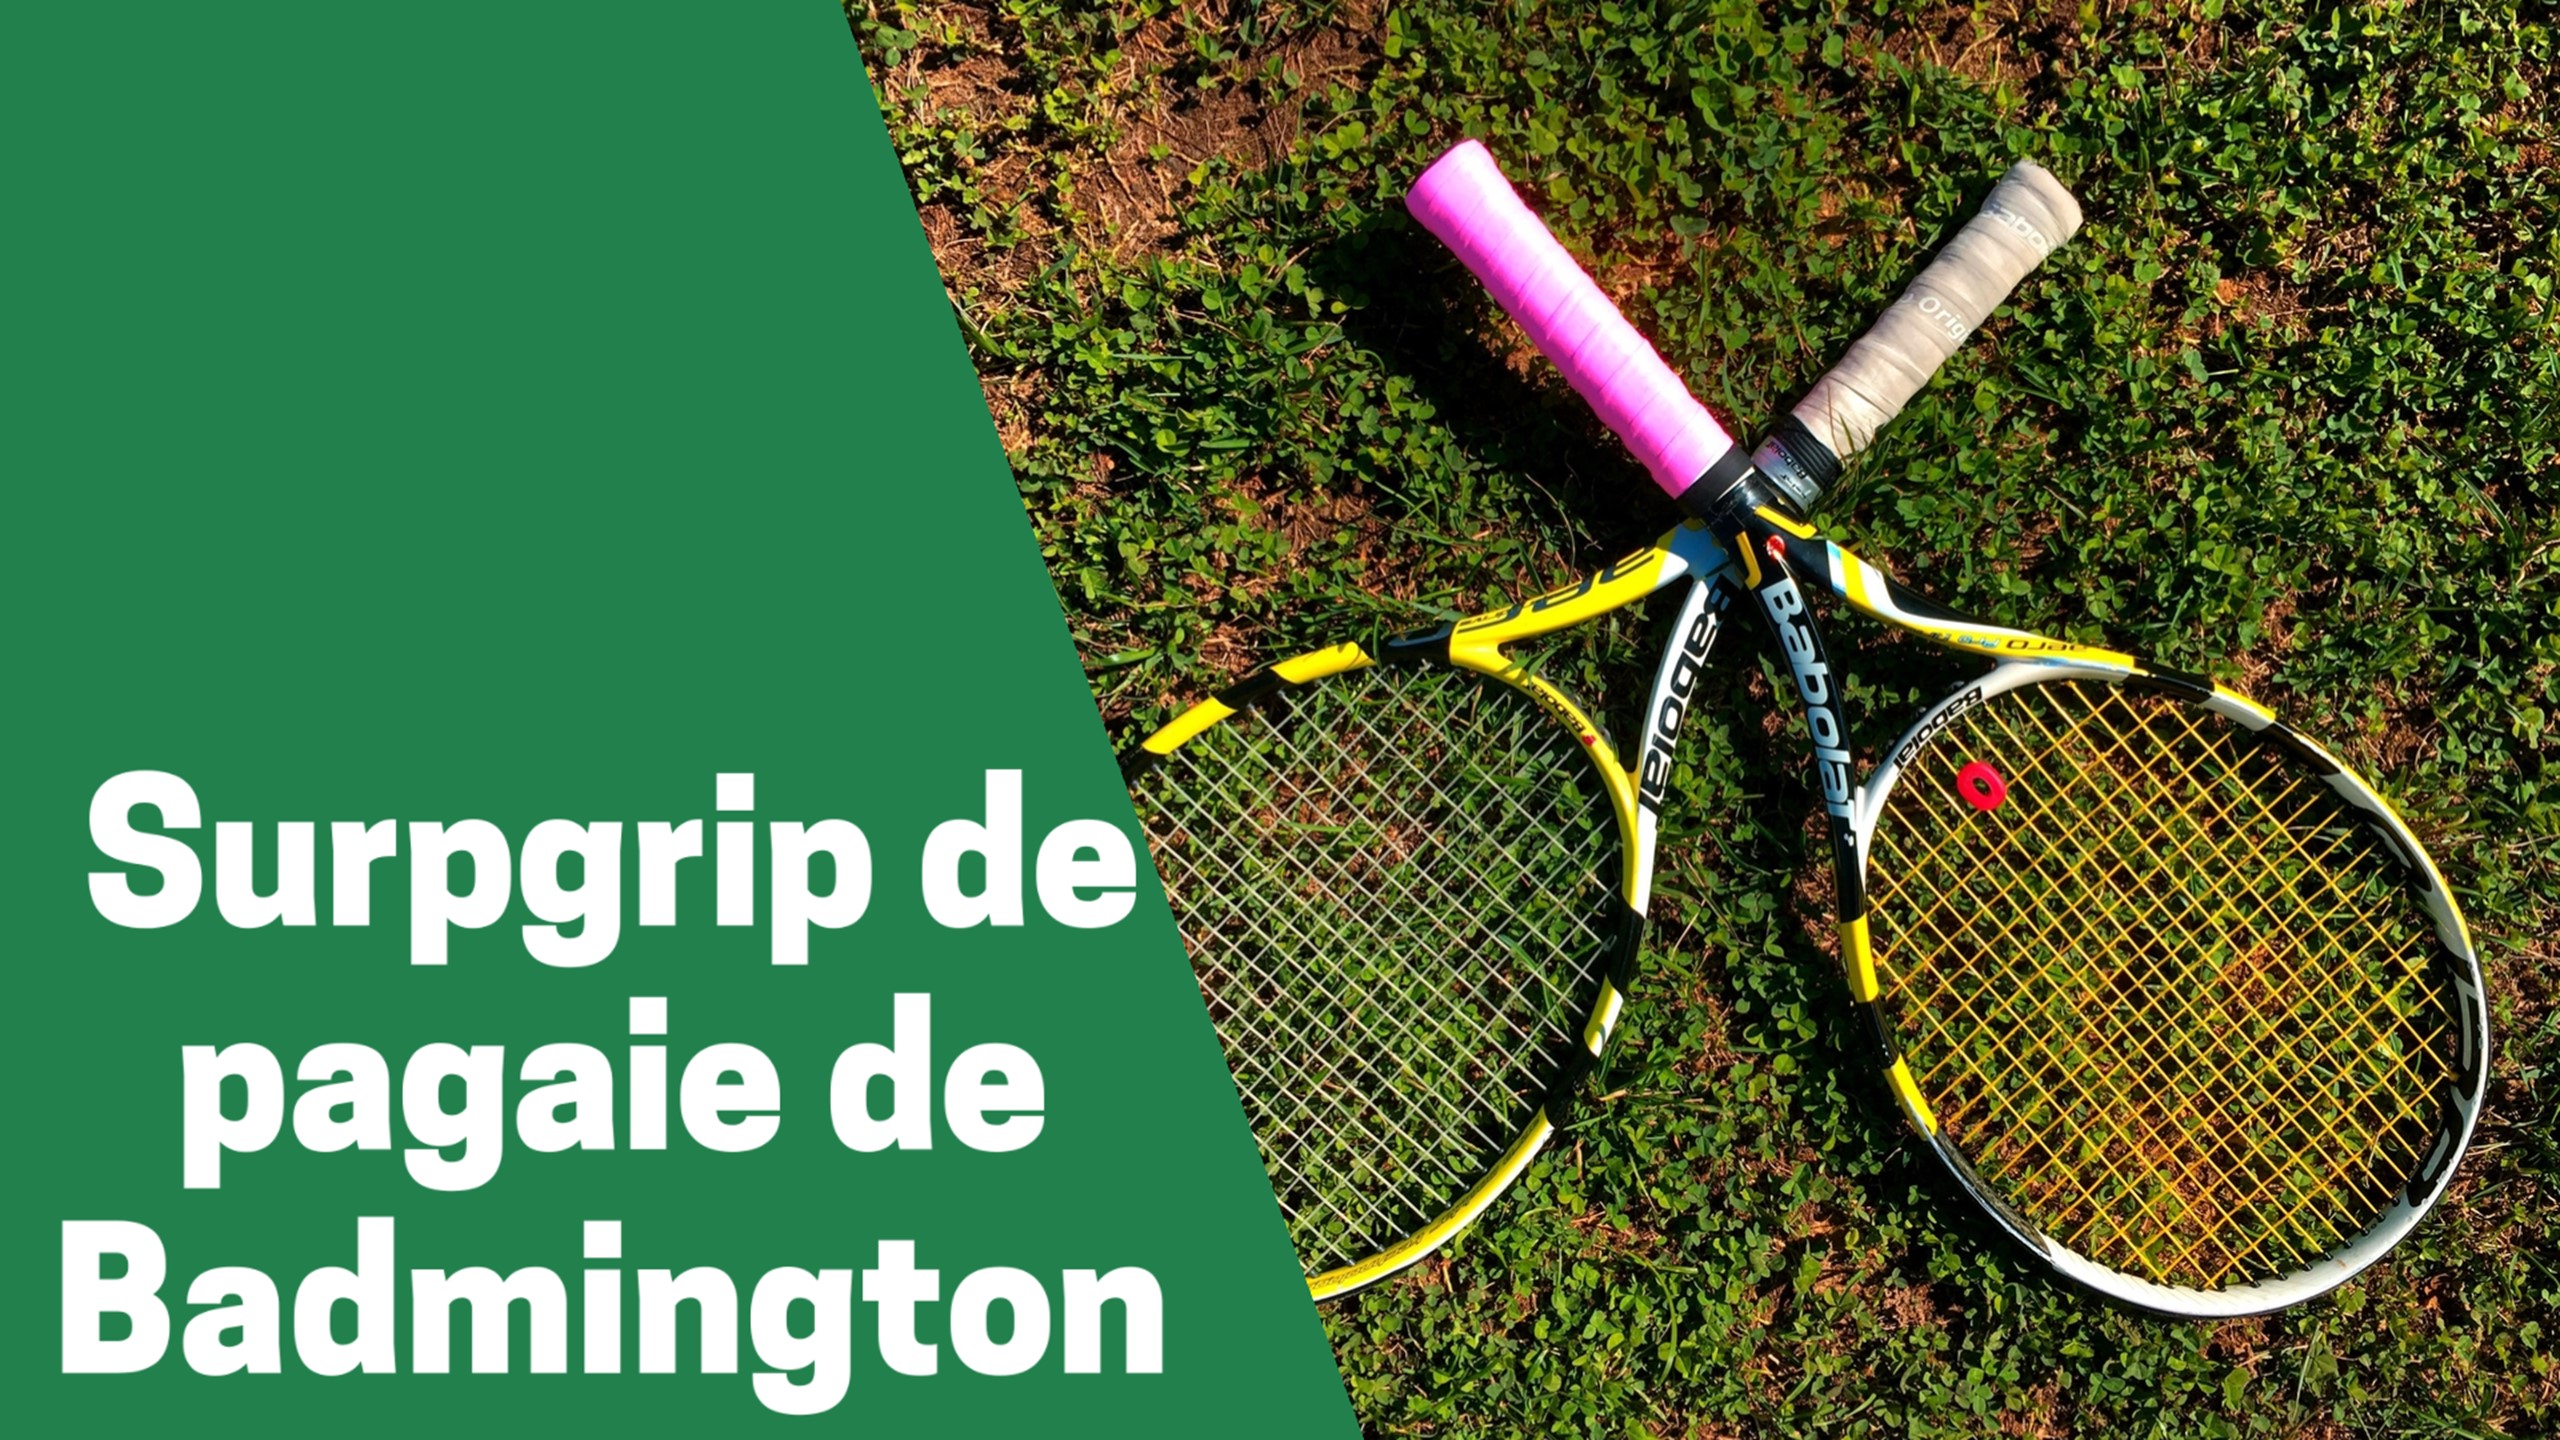 Raquette Grip anti Slip tennis surgrip badminton surgrip accessoi LC 